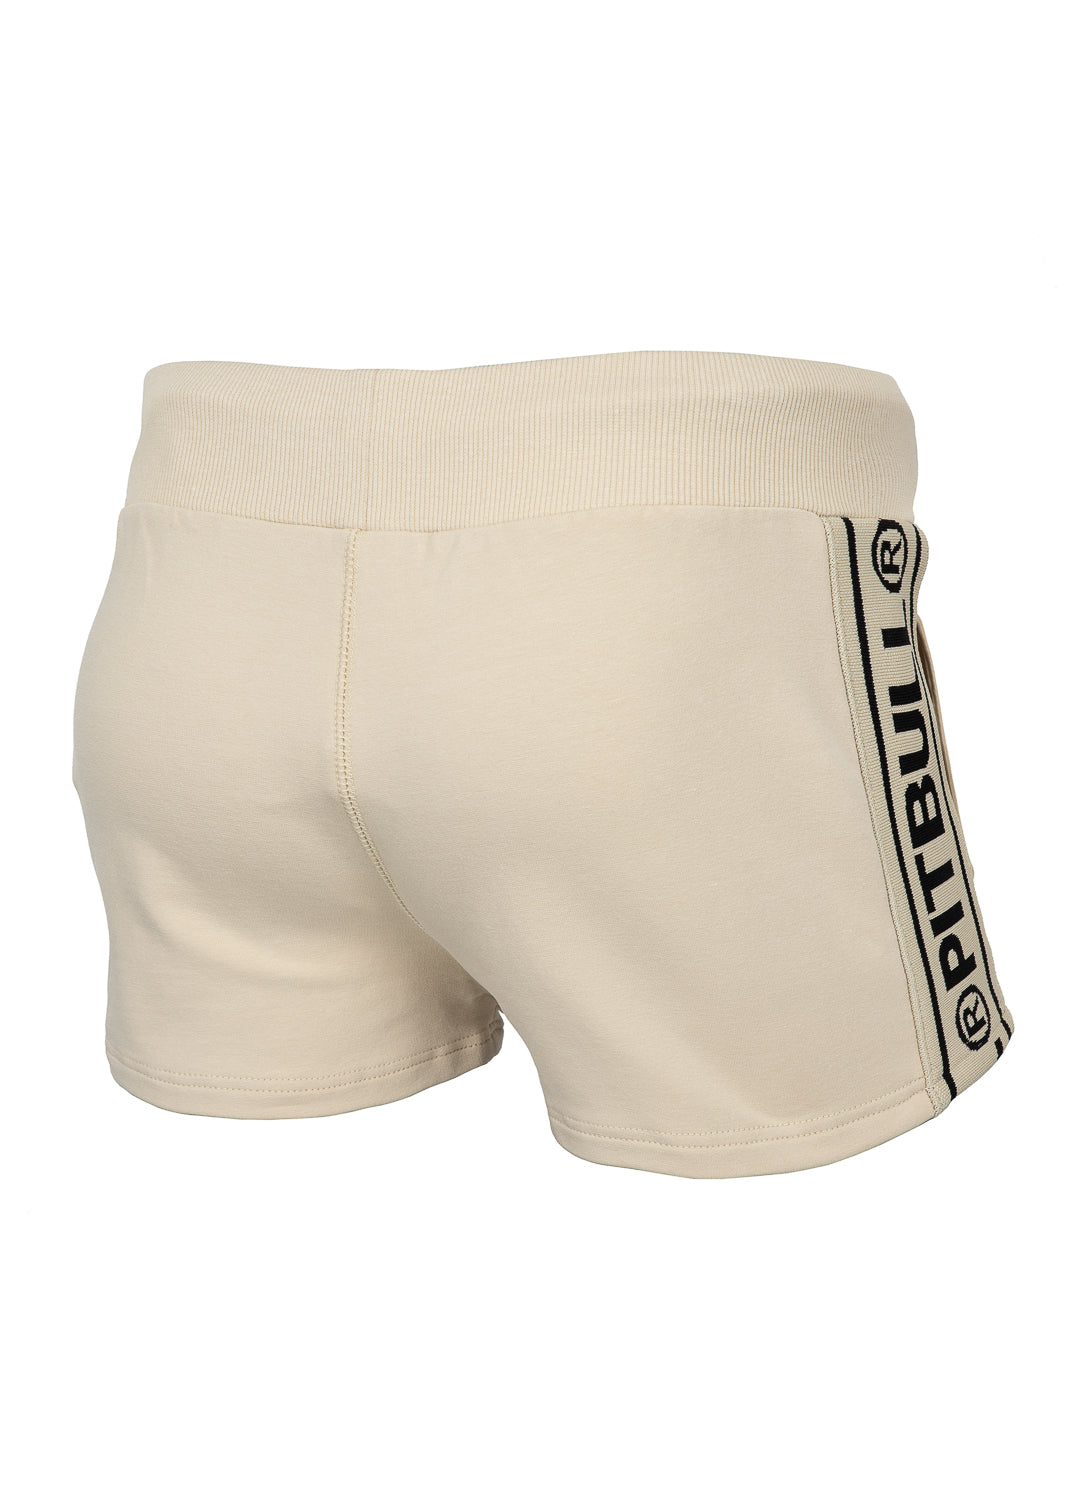 Women's shorts GLORIA French Terry Sand - Pitbull West Coast International Store 